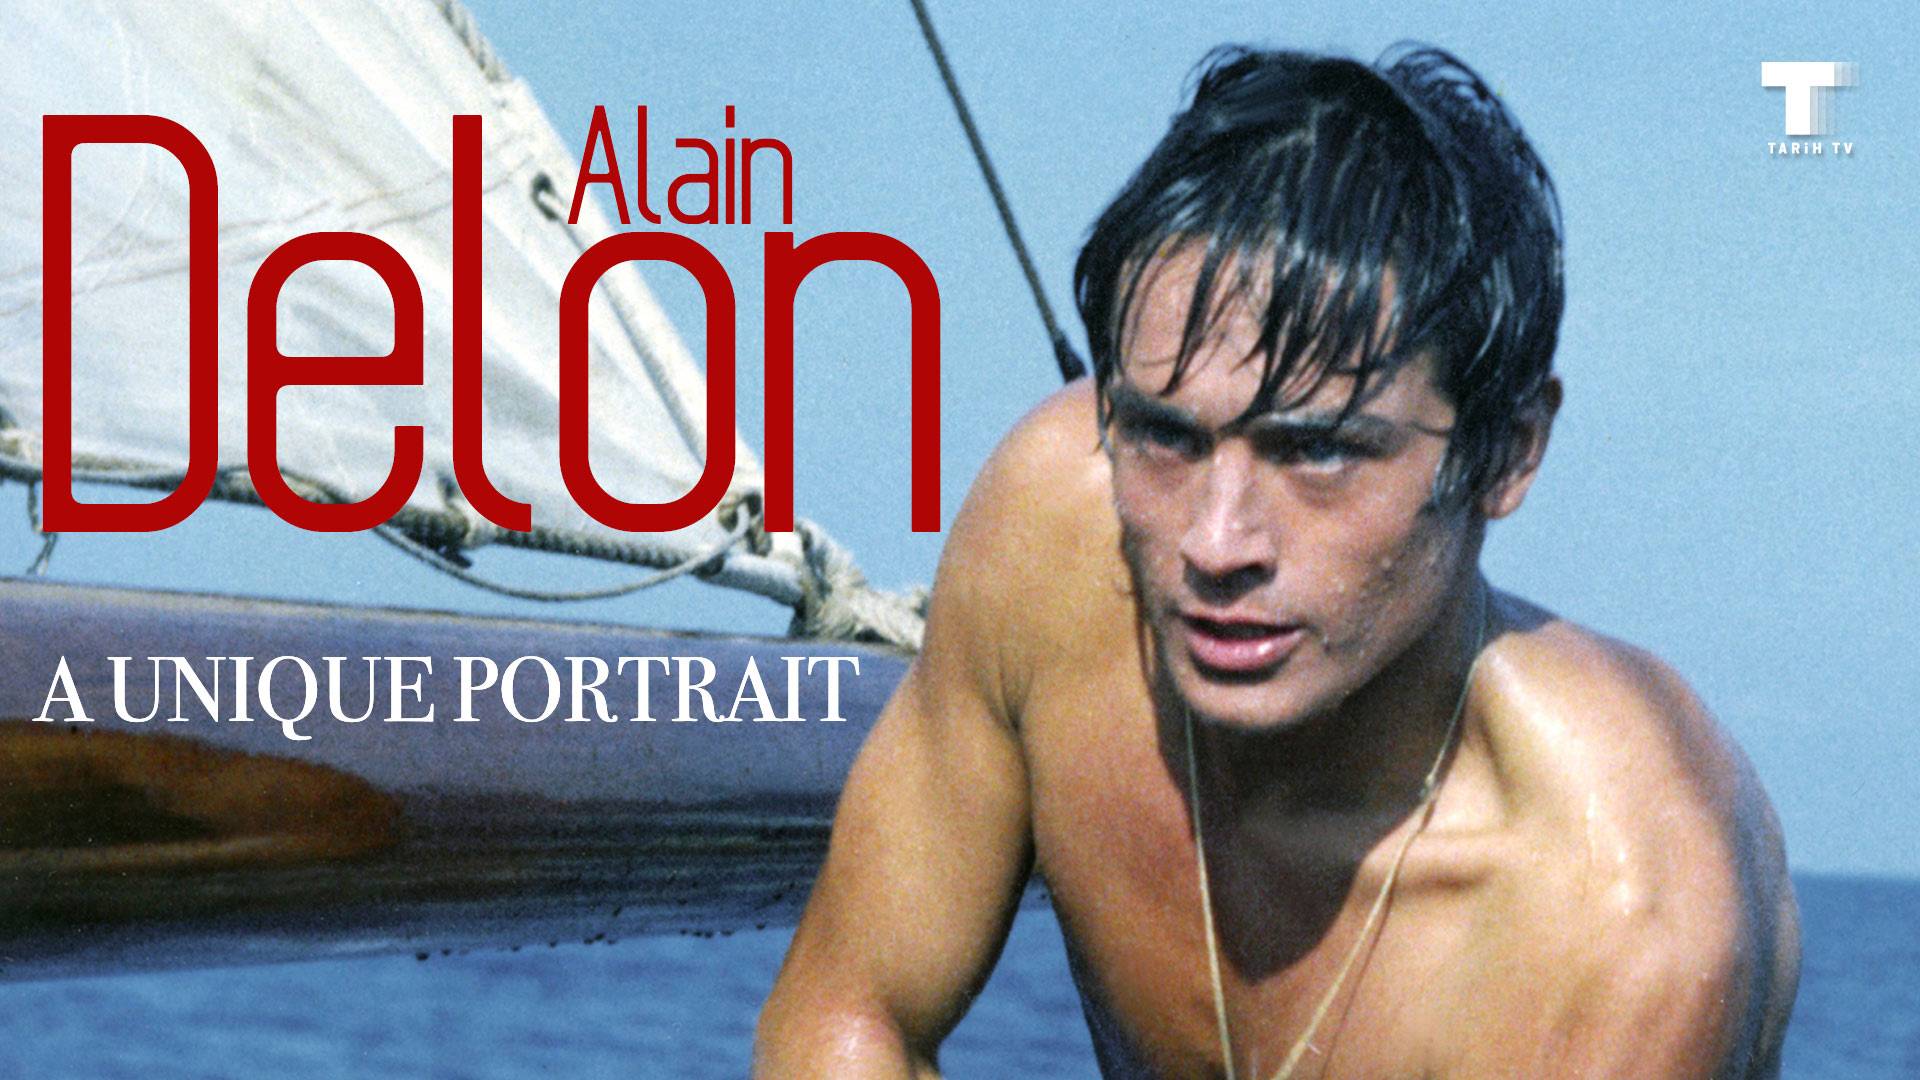 Benzersiz Bir Portre: Alan Delon